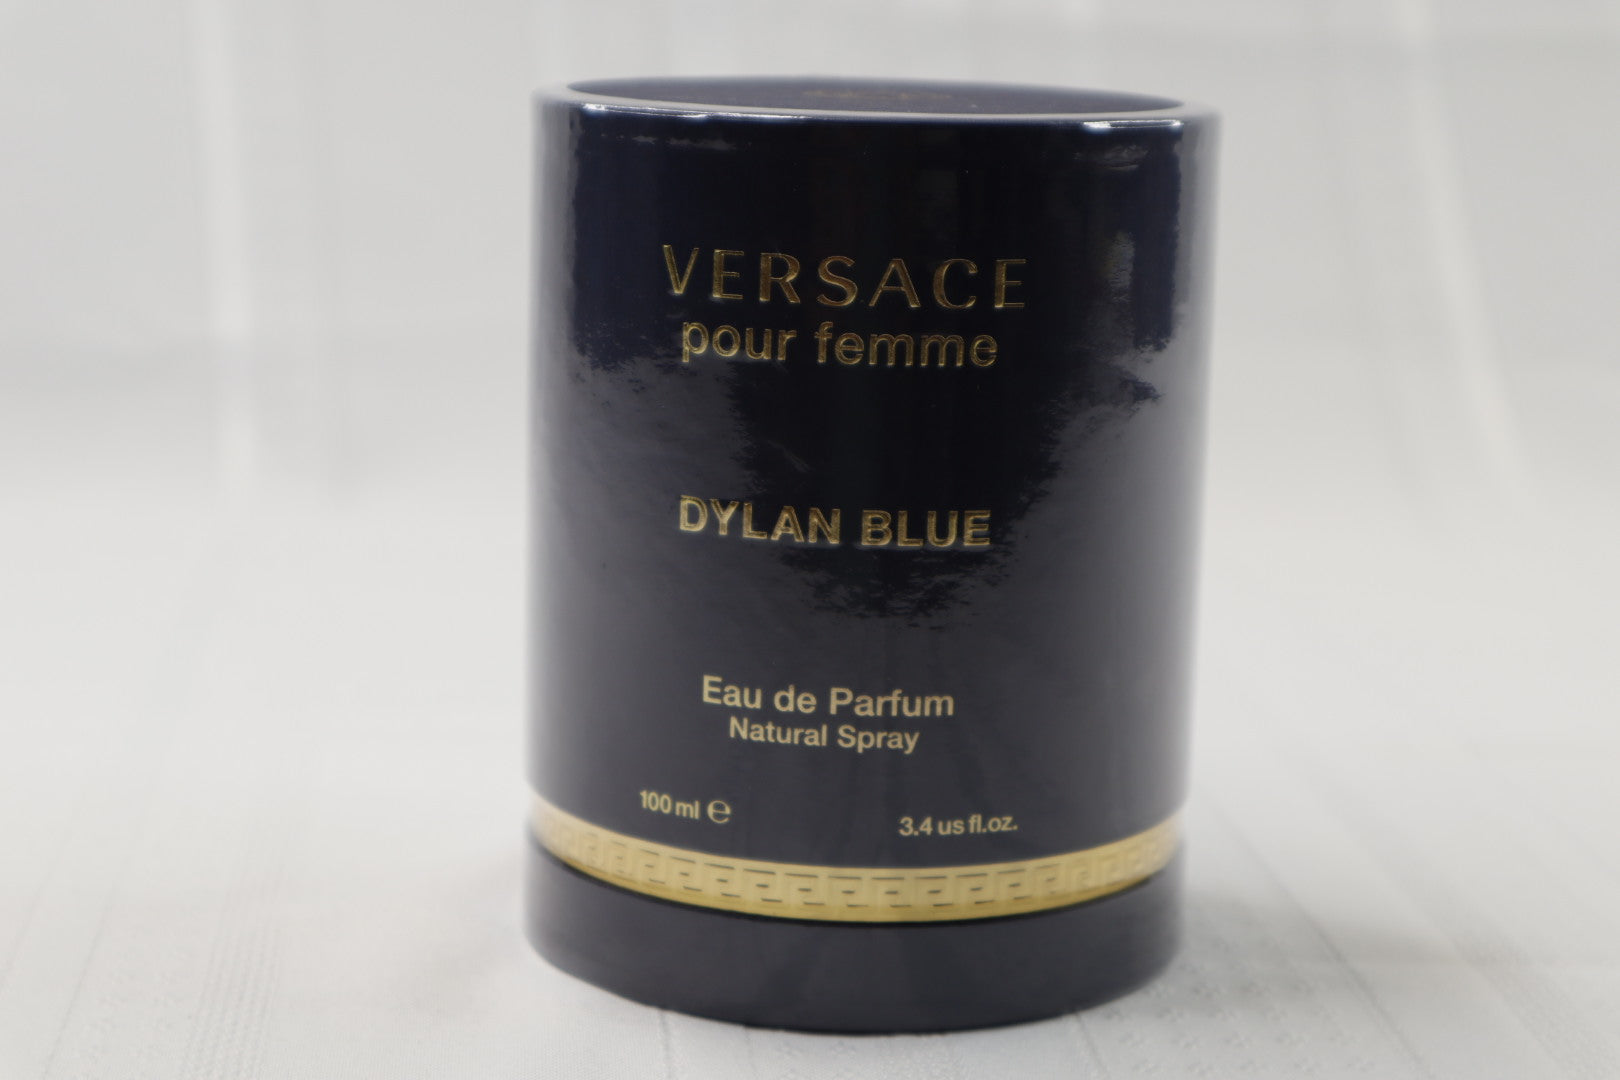  Versace POUR FEMME DYLAN BLUE 4 PIECE GIFT SET - 3.4